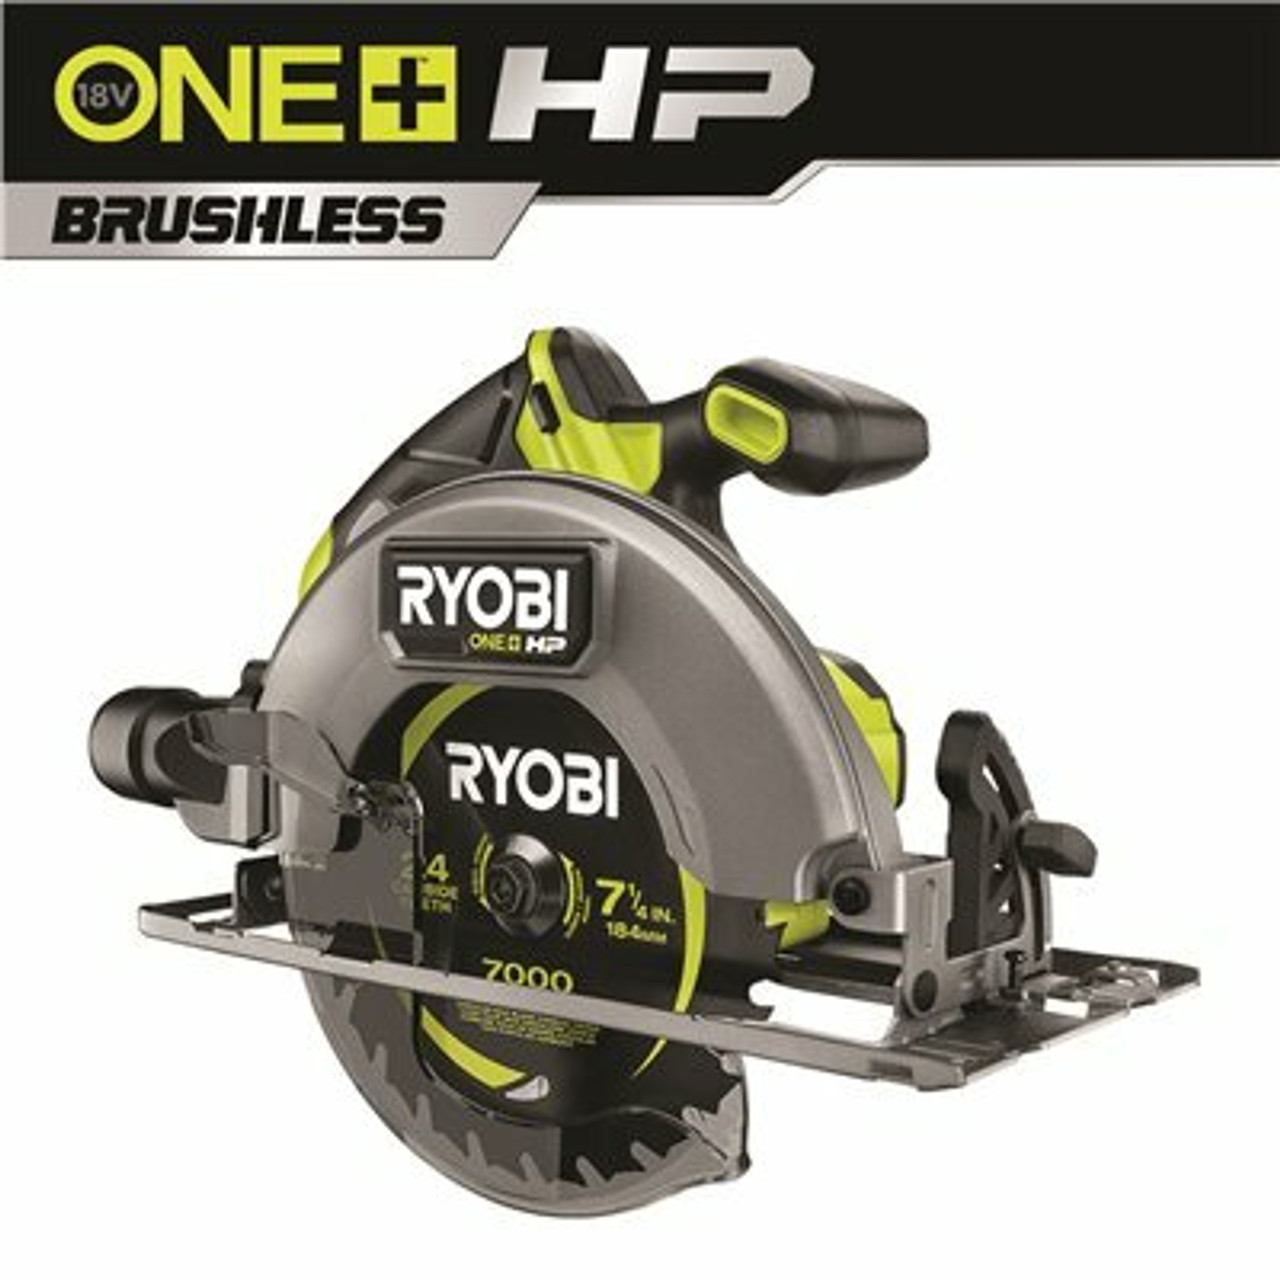 Ryobi One+ Hp 18V Brushless Cordless 7-1/4 In. Circular Saw (Tool Only)